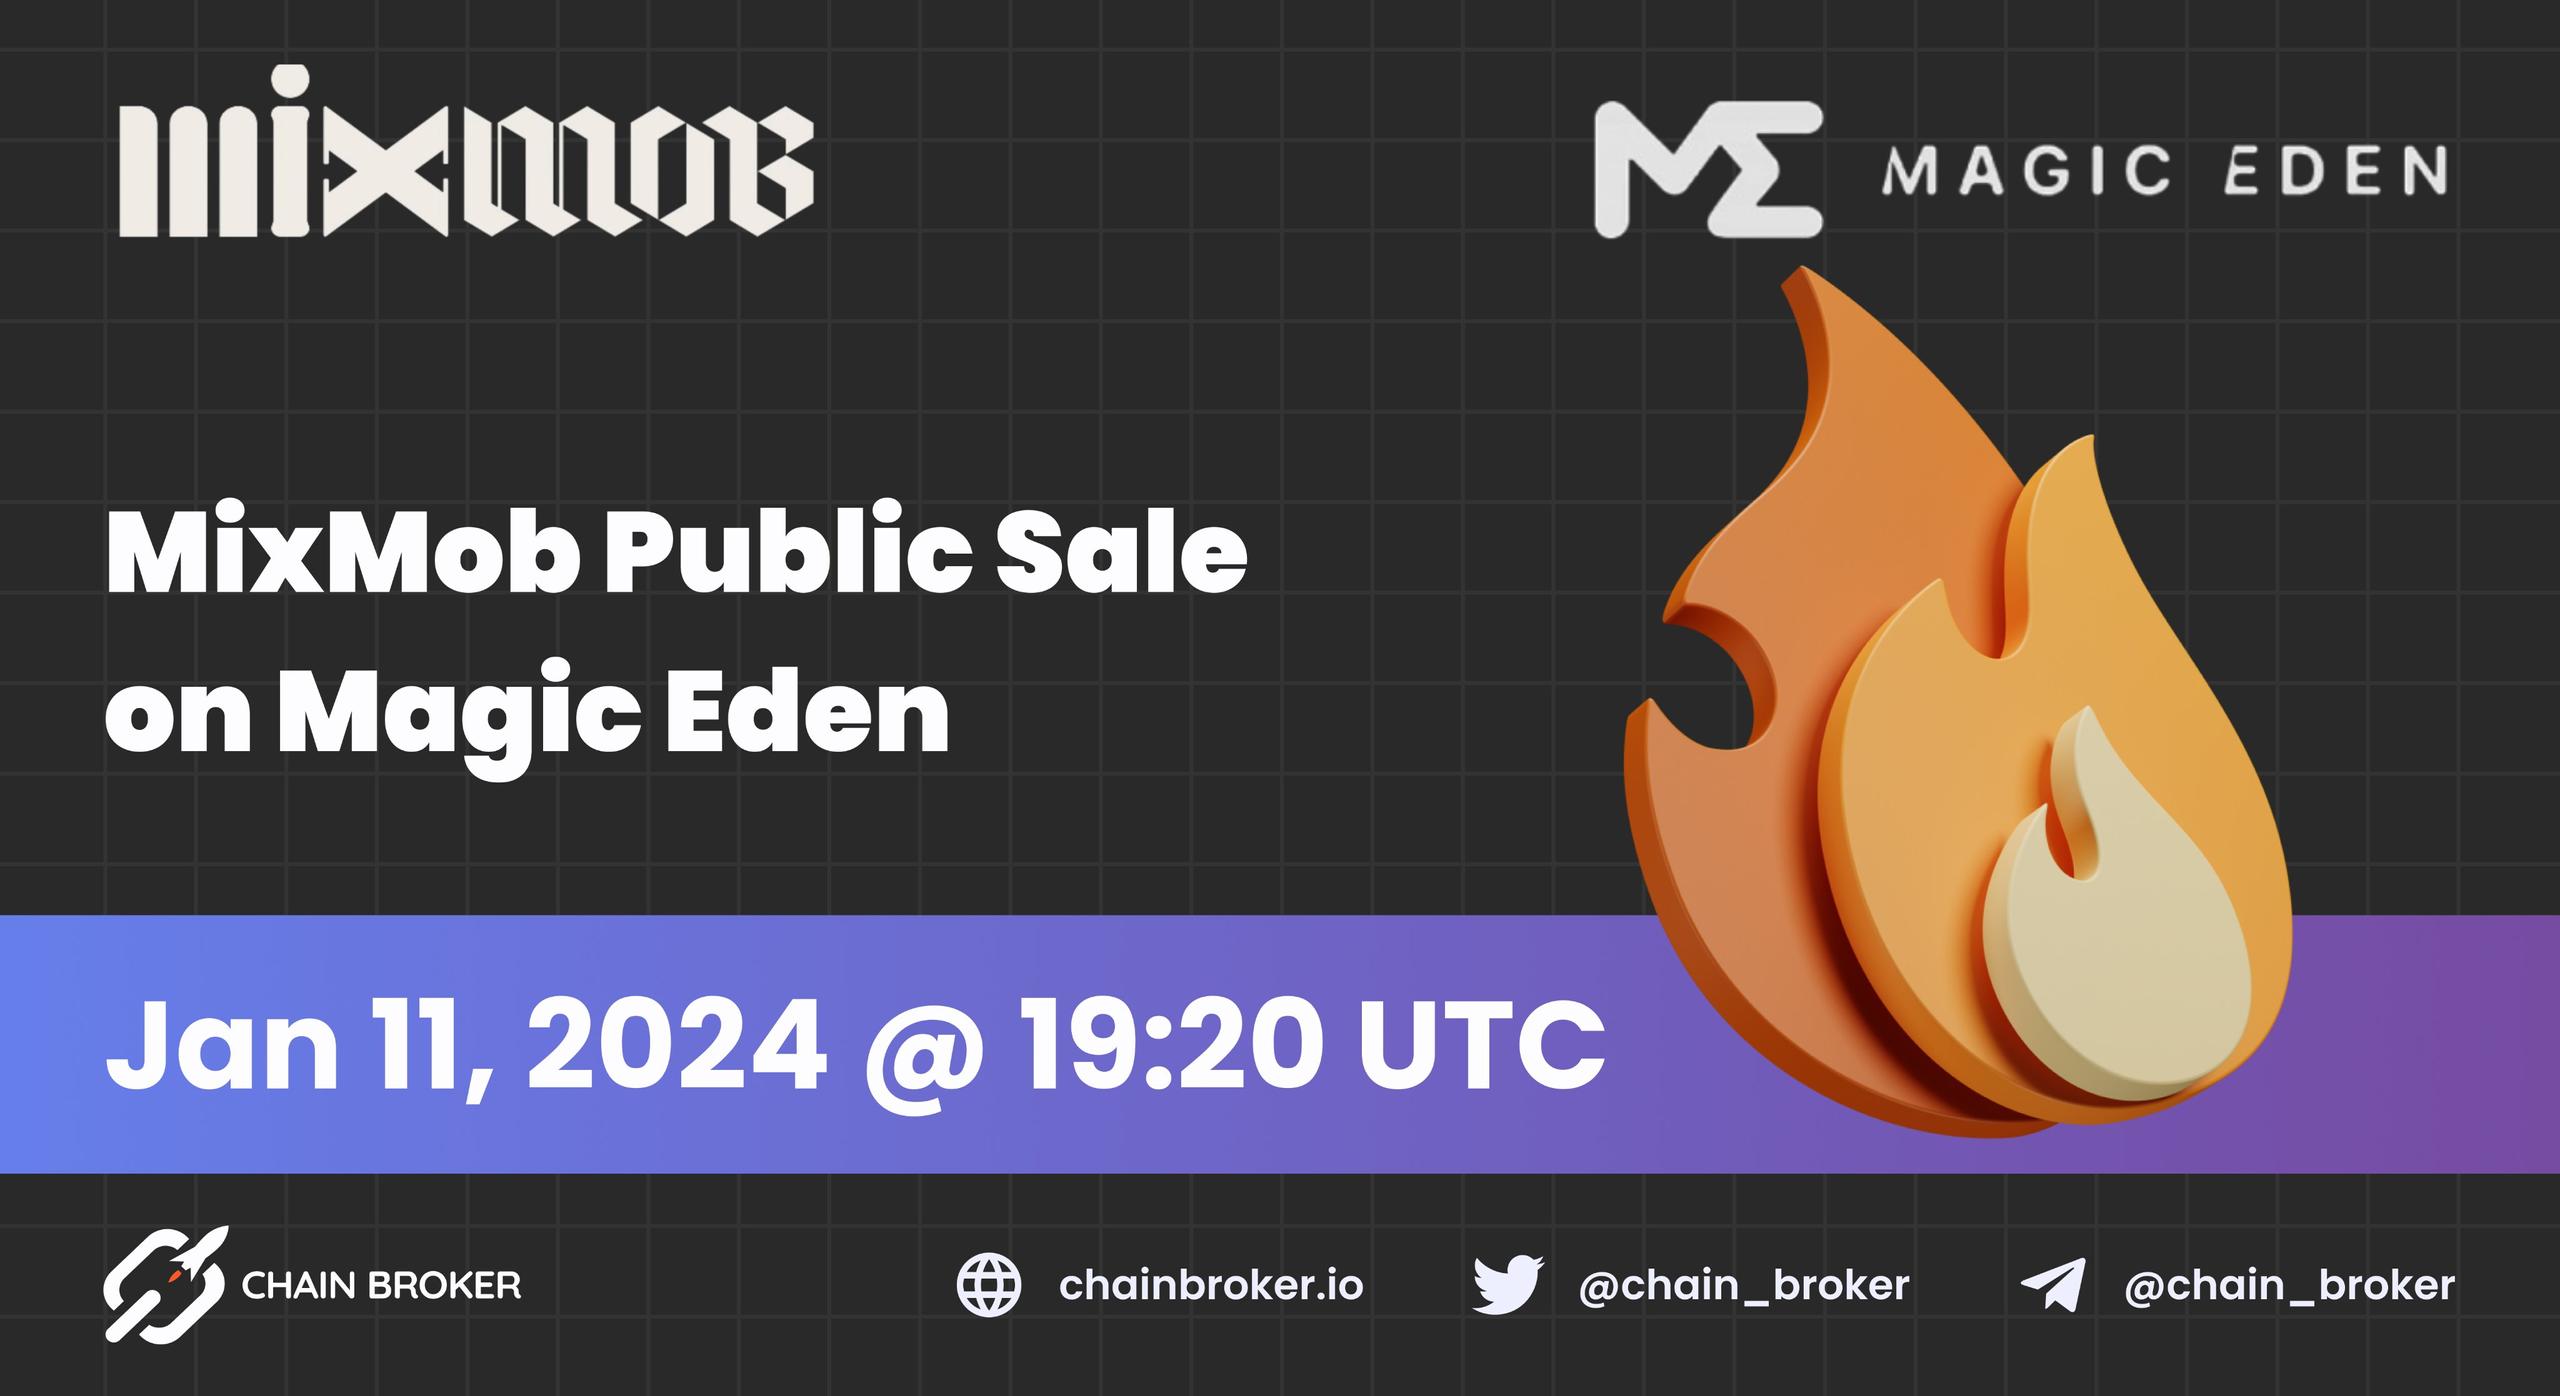 MixMob will conduct Public Sale on Magic Eden